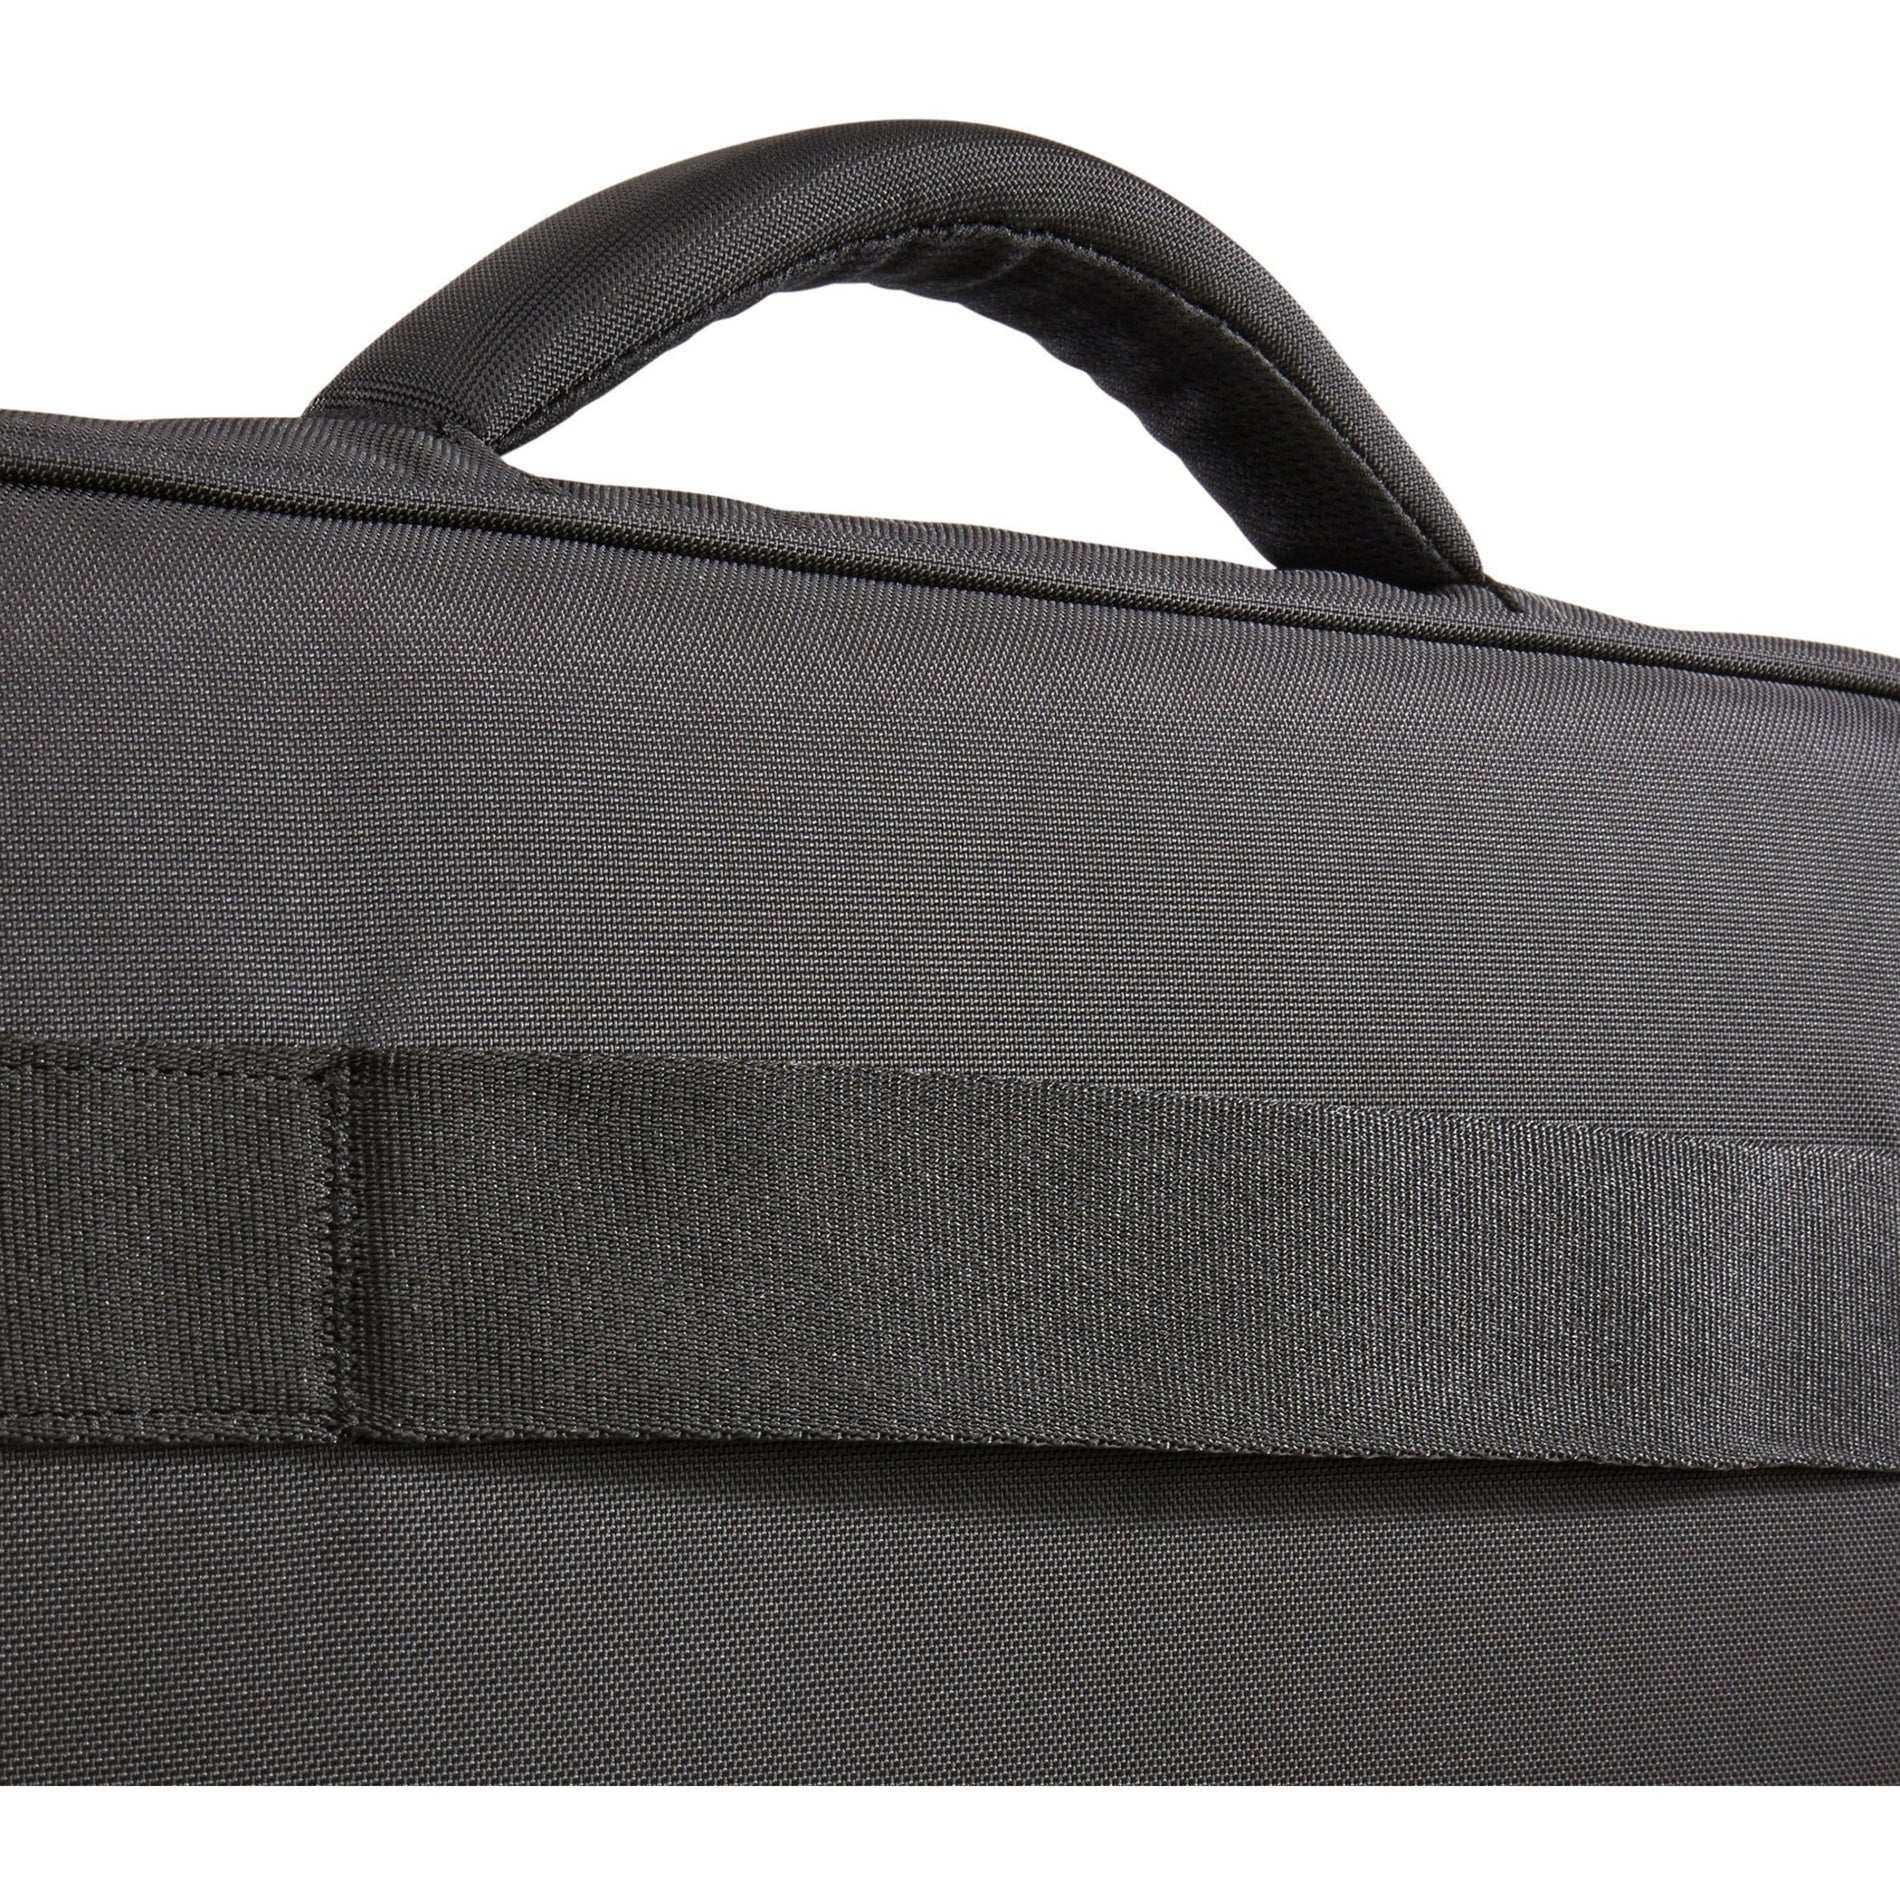 Case Logic 3204528 PROPEL BC 15.6IN BLACK Briefcase, Tablet Compartment, Shoulder Strap